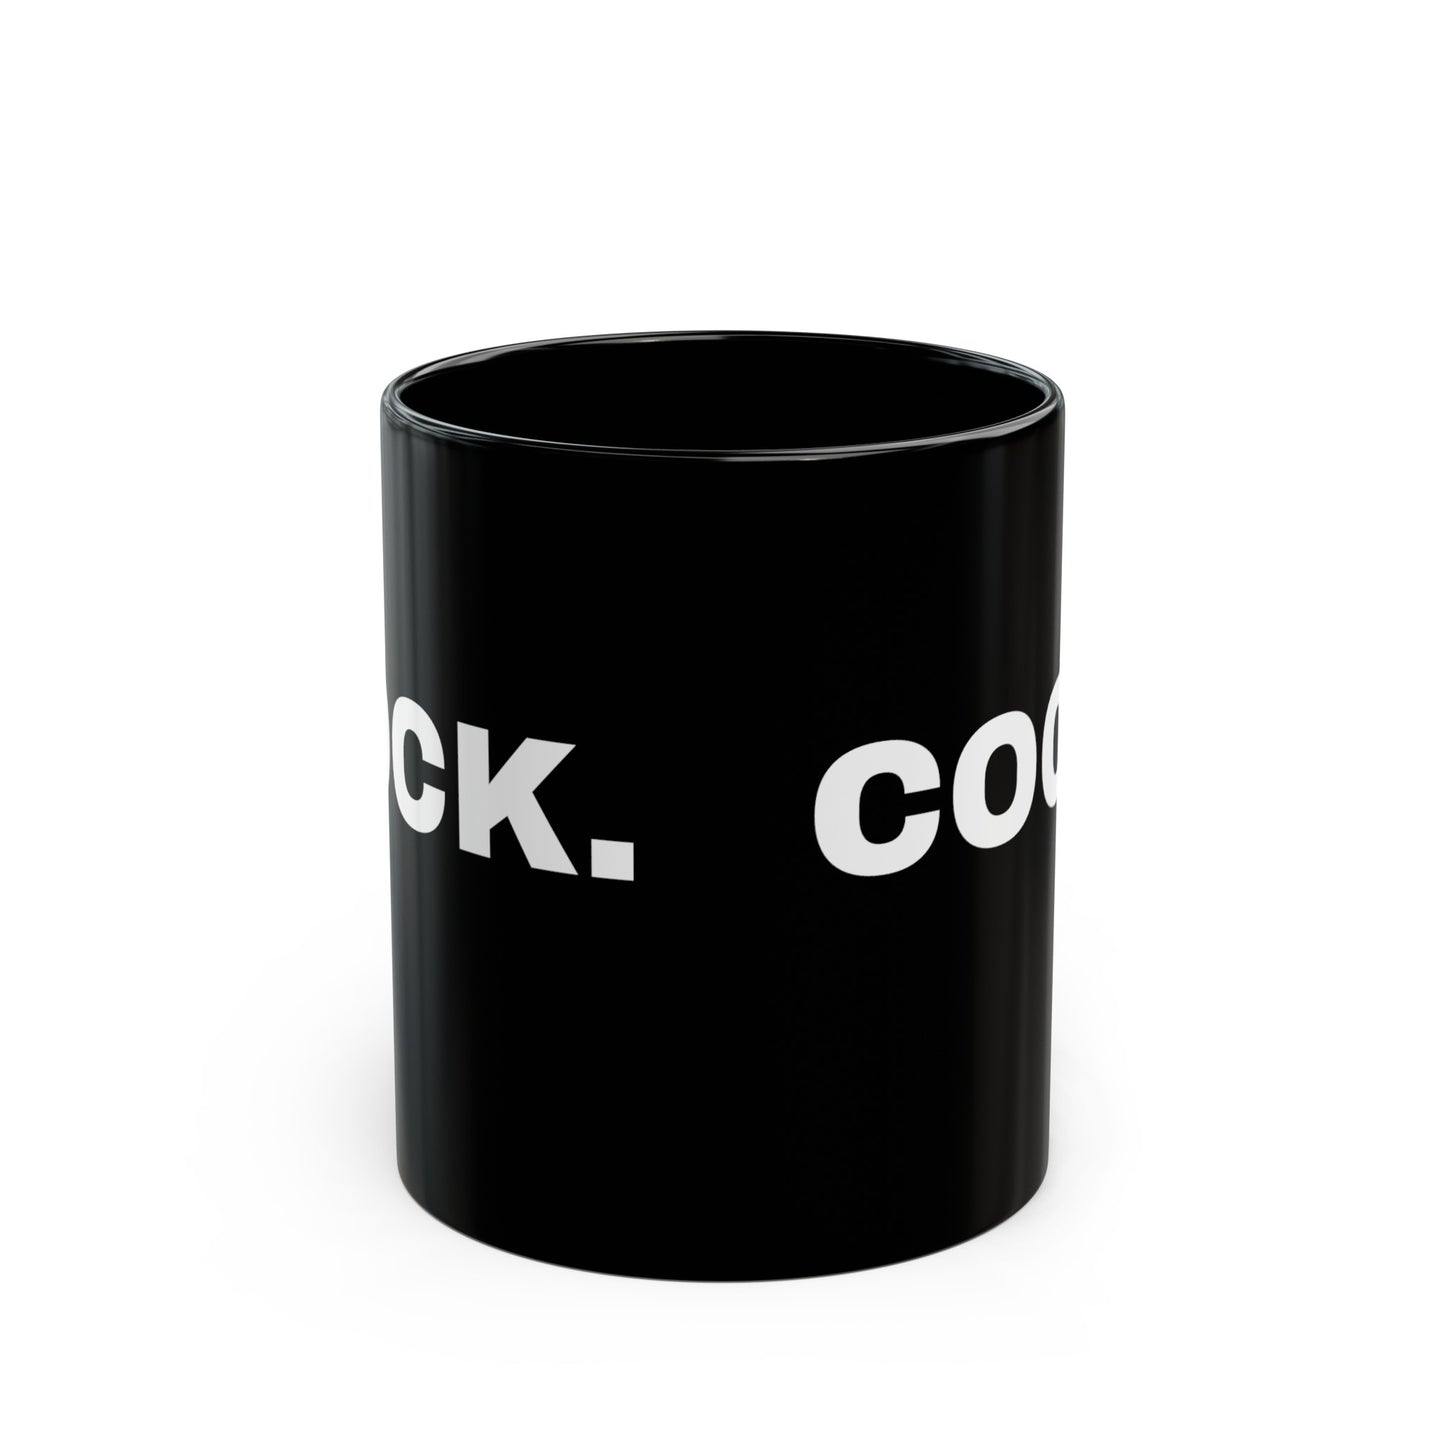 COCK. - Black Mug (11oz)